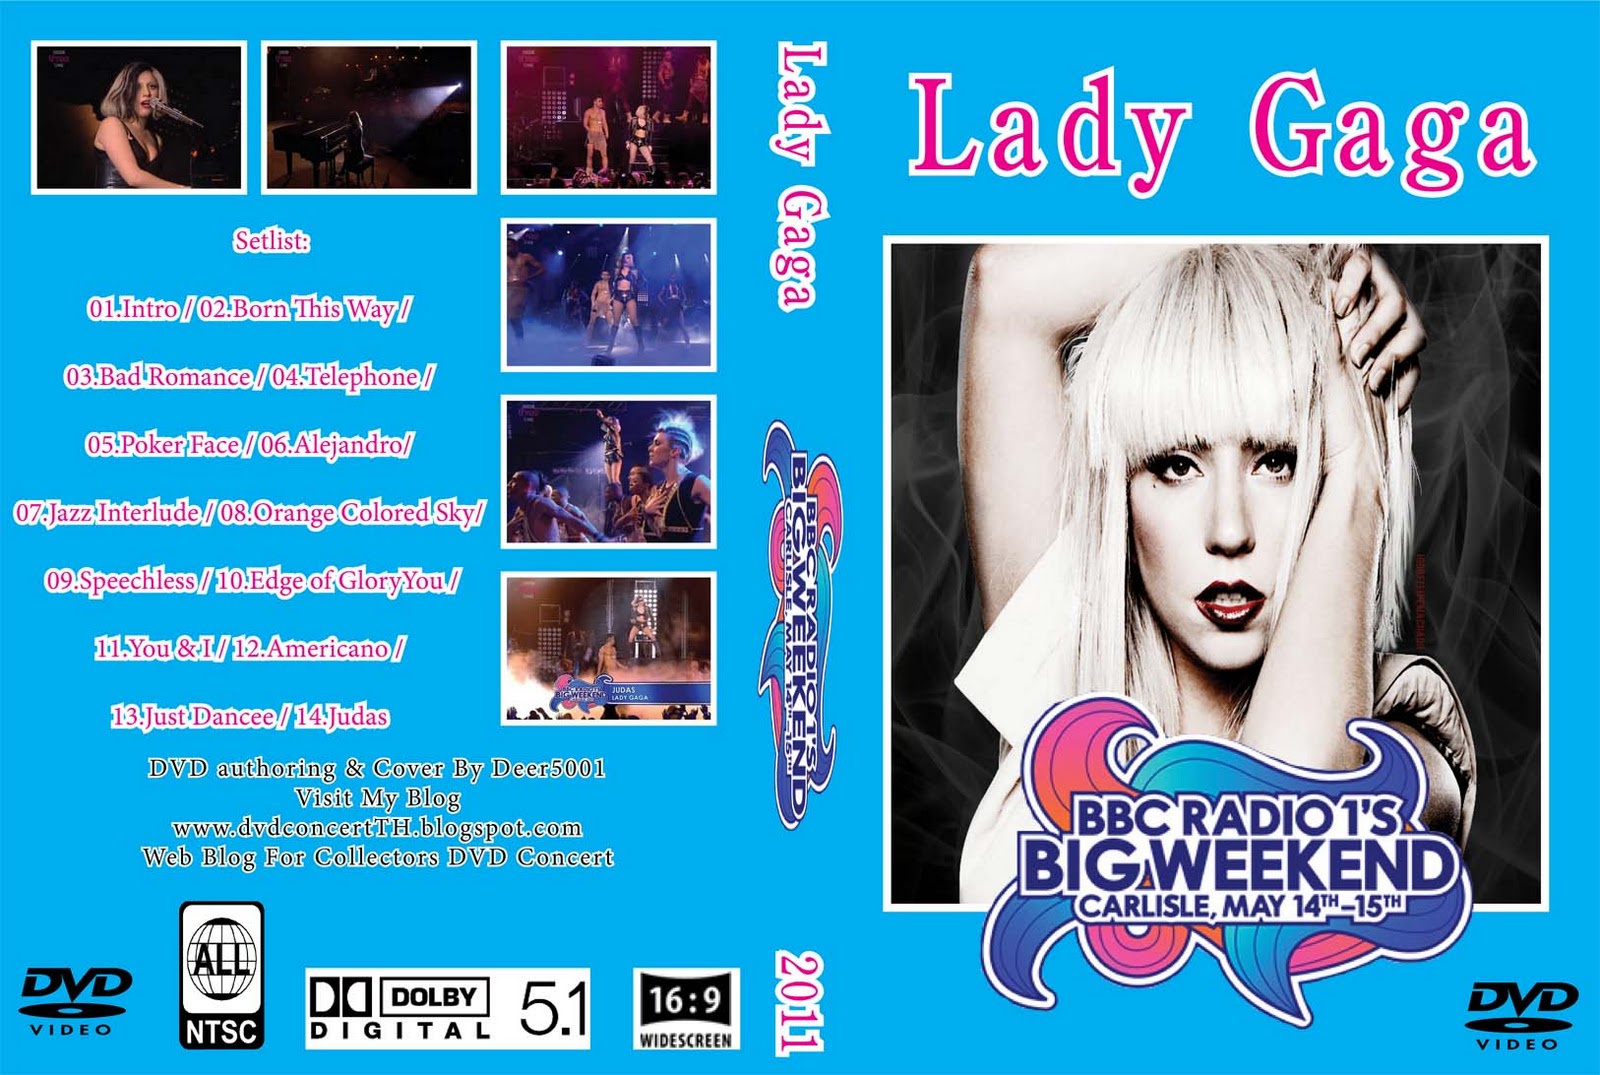 http://3.bp.blogspot.com/-T_8G21-_uhQ/Tox684mbDMI/AAAAAAAAD7U/VIbnlLSVes8/s1600/DVD+Cover+Low+Quality+NTSC+-+Lady+Gaga+-+2011-05-15+-+Live+at+BBC+Radio1%2527s+Big+Weekend.jpg